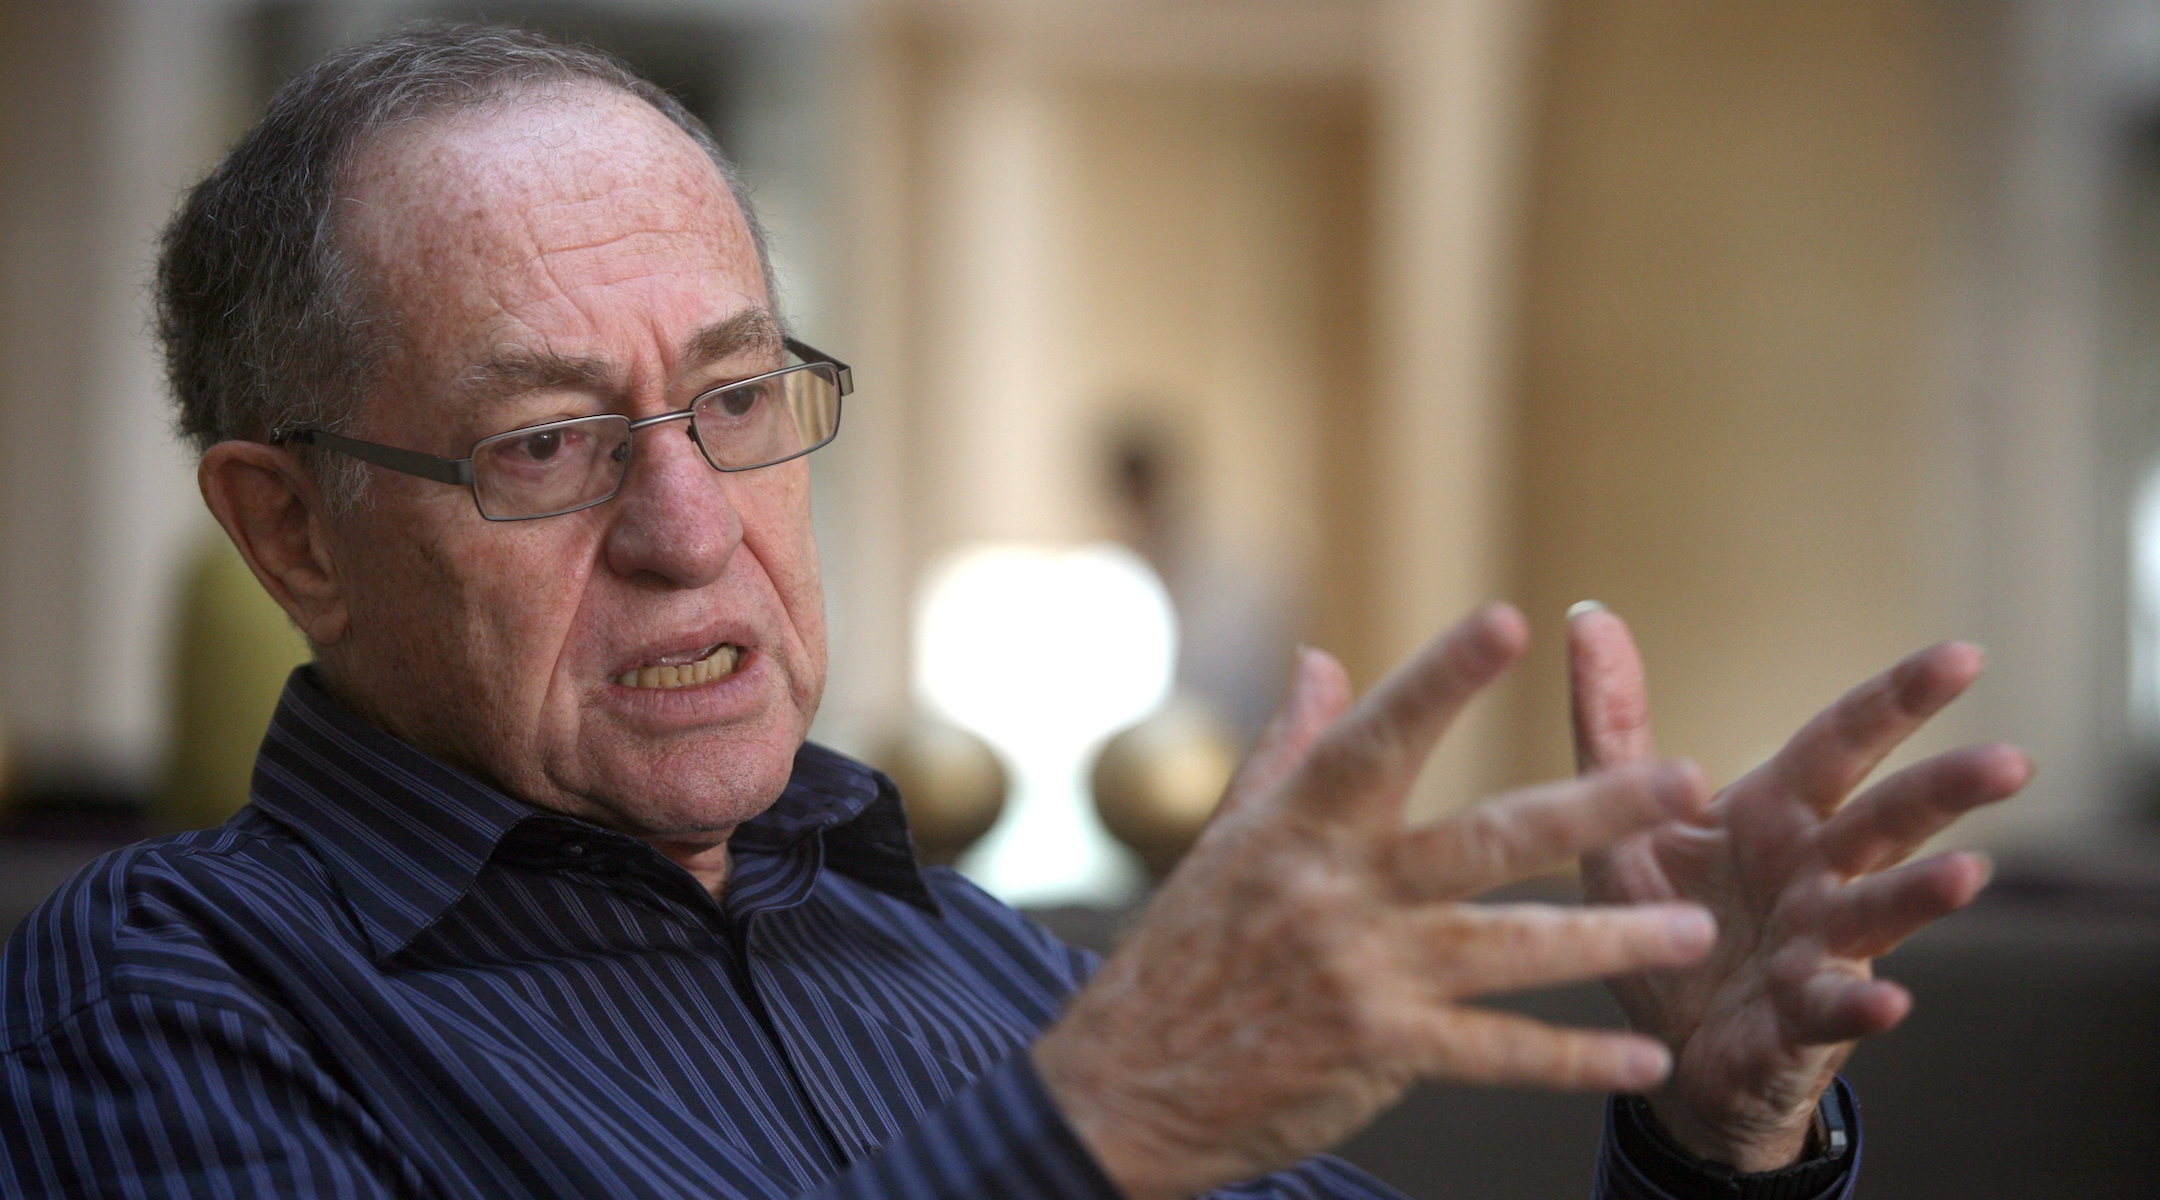 Alan Dershowitz speaks during an interview on May 18, 2010 in Jerusalem, Israel. (Lior Mizrahi/Getty Images)